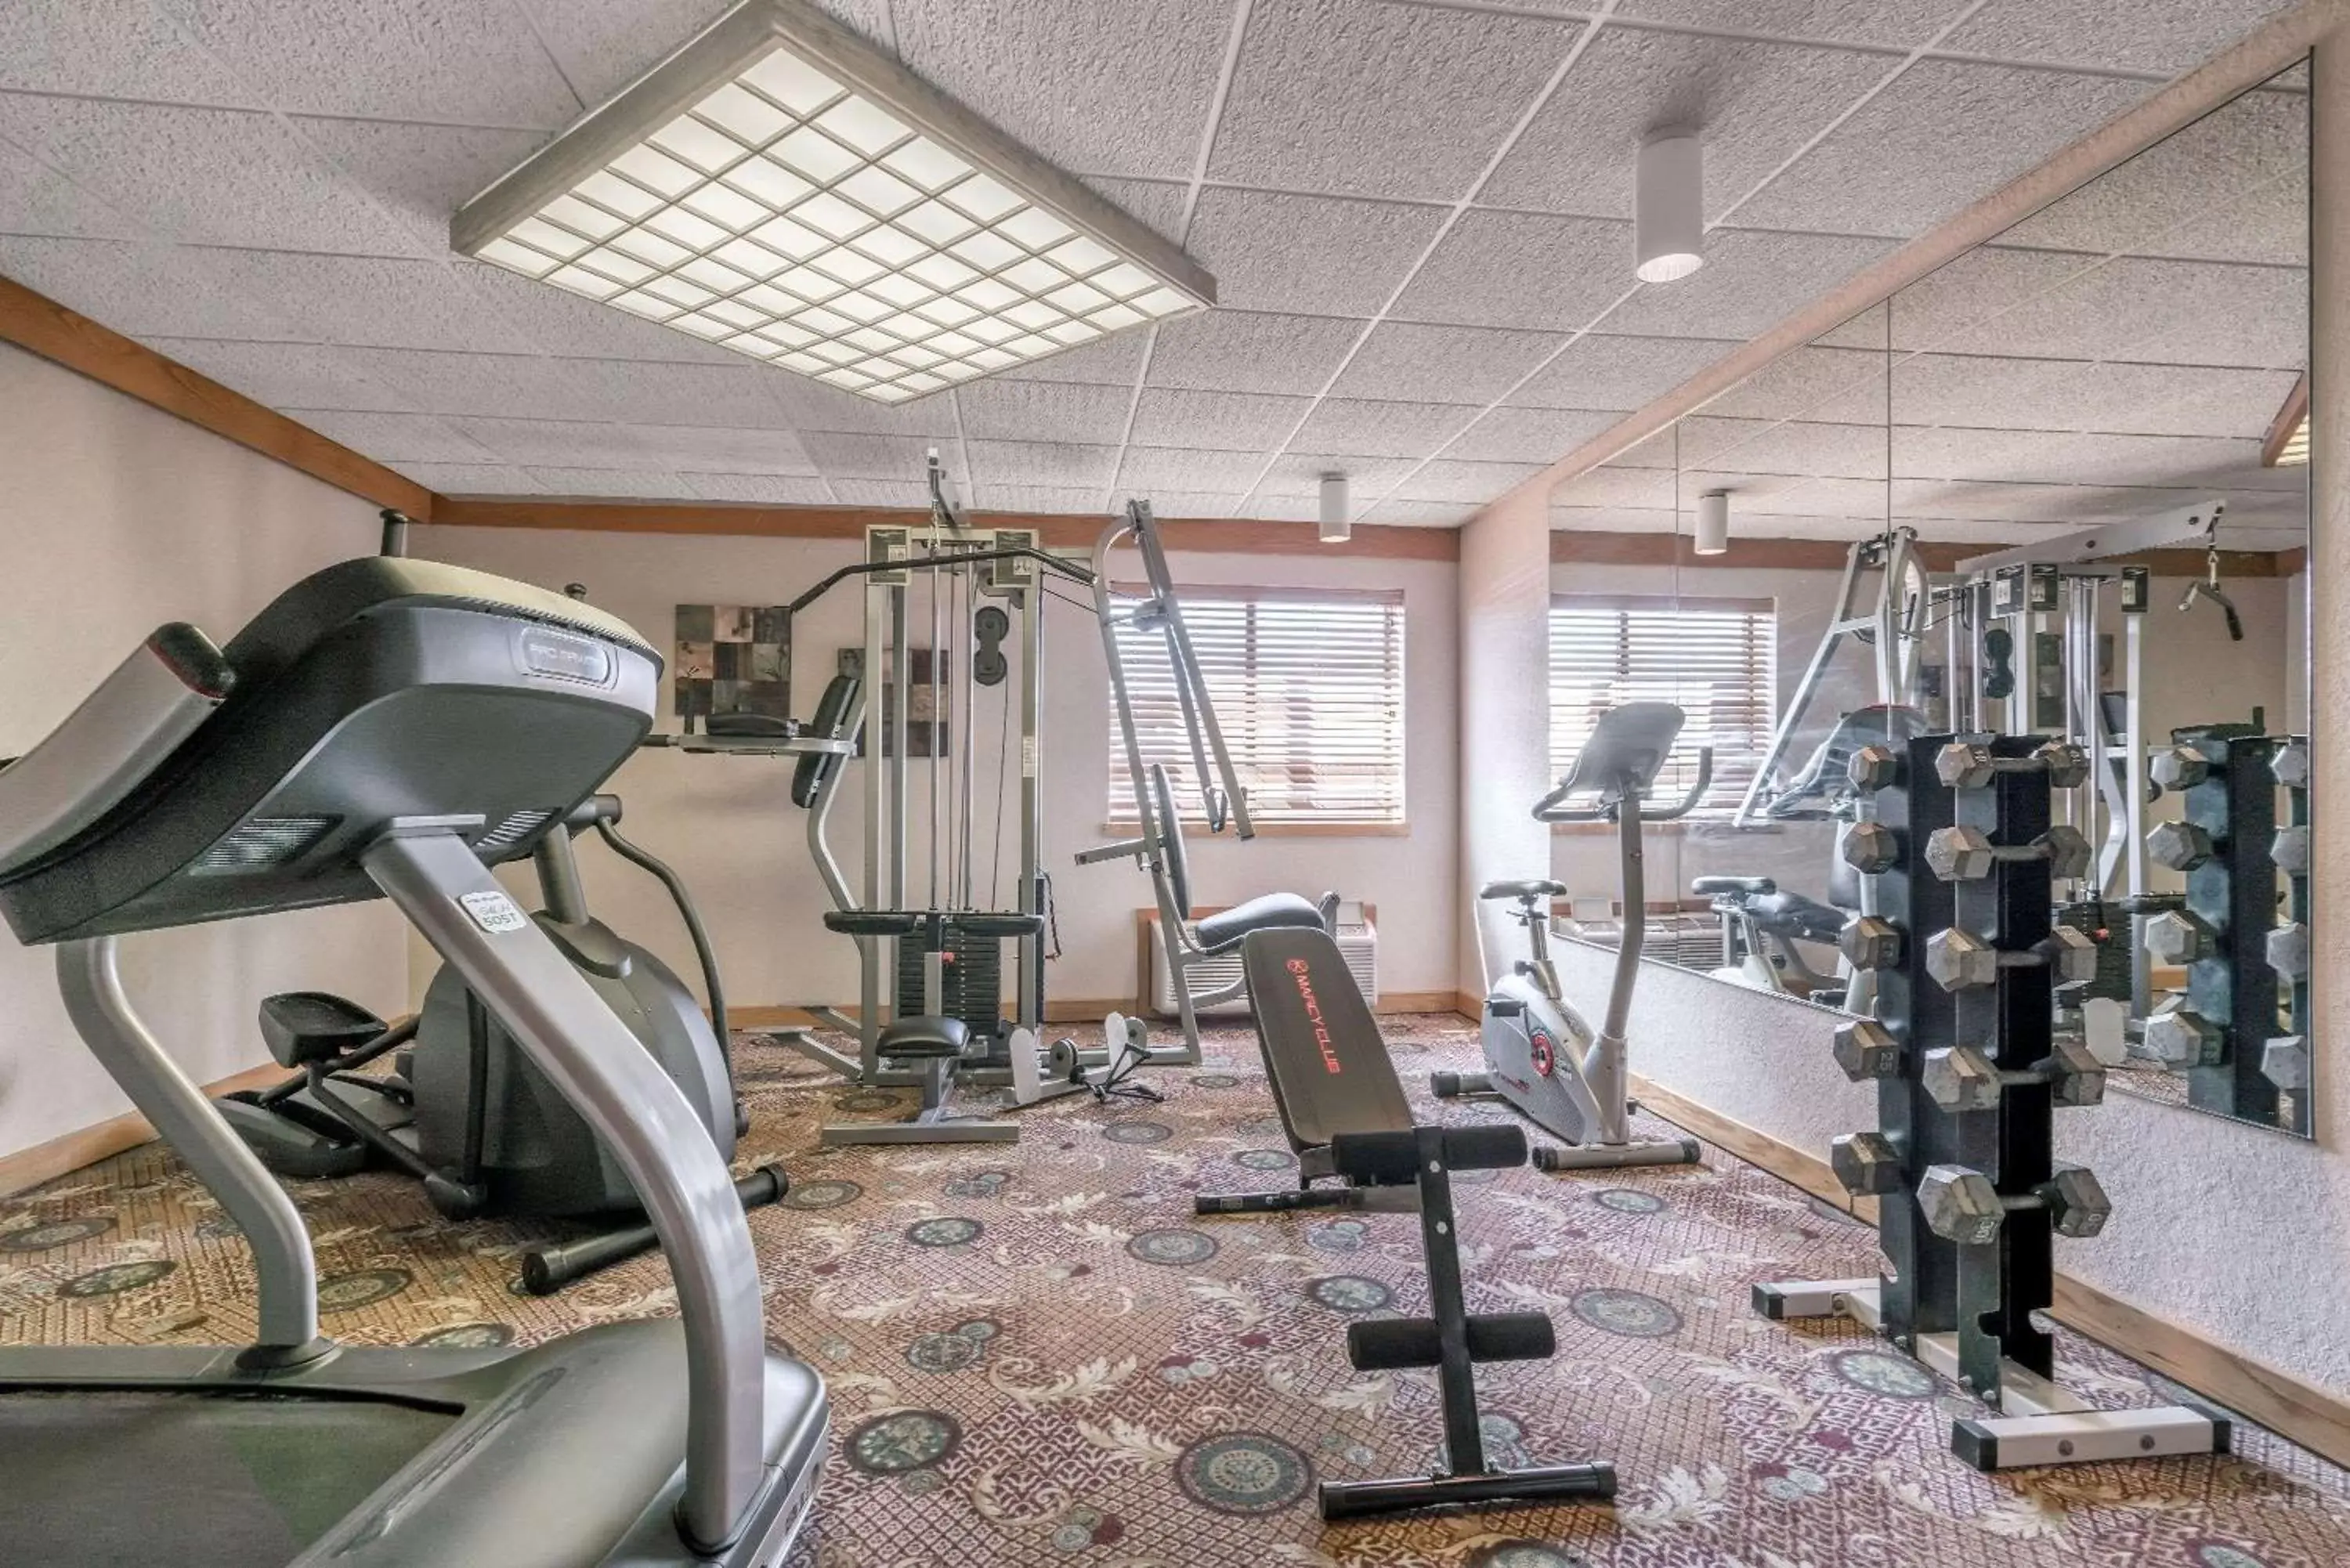 Fitness centre/facilities, Fitness Center/Facilities in Ramada by Wyndham Fargo